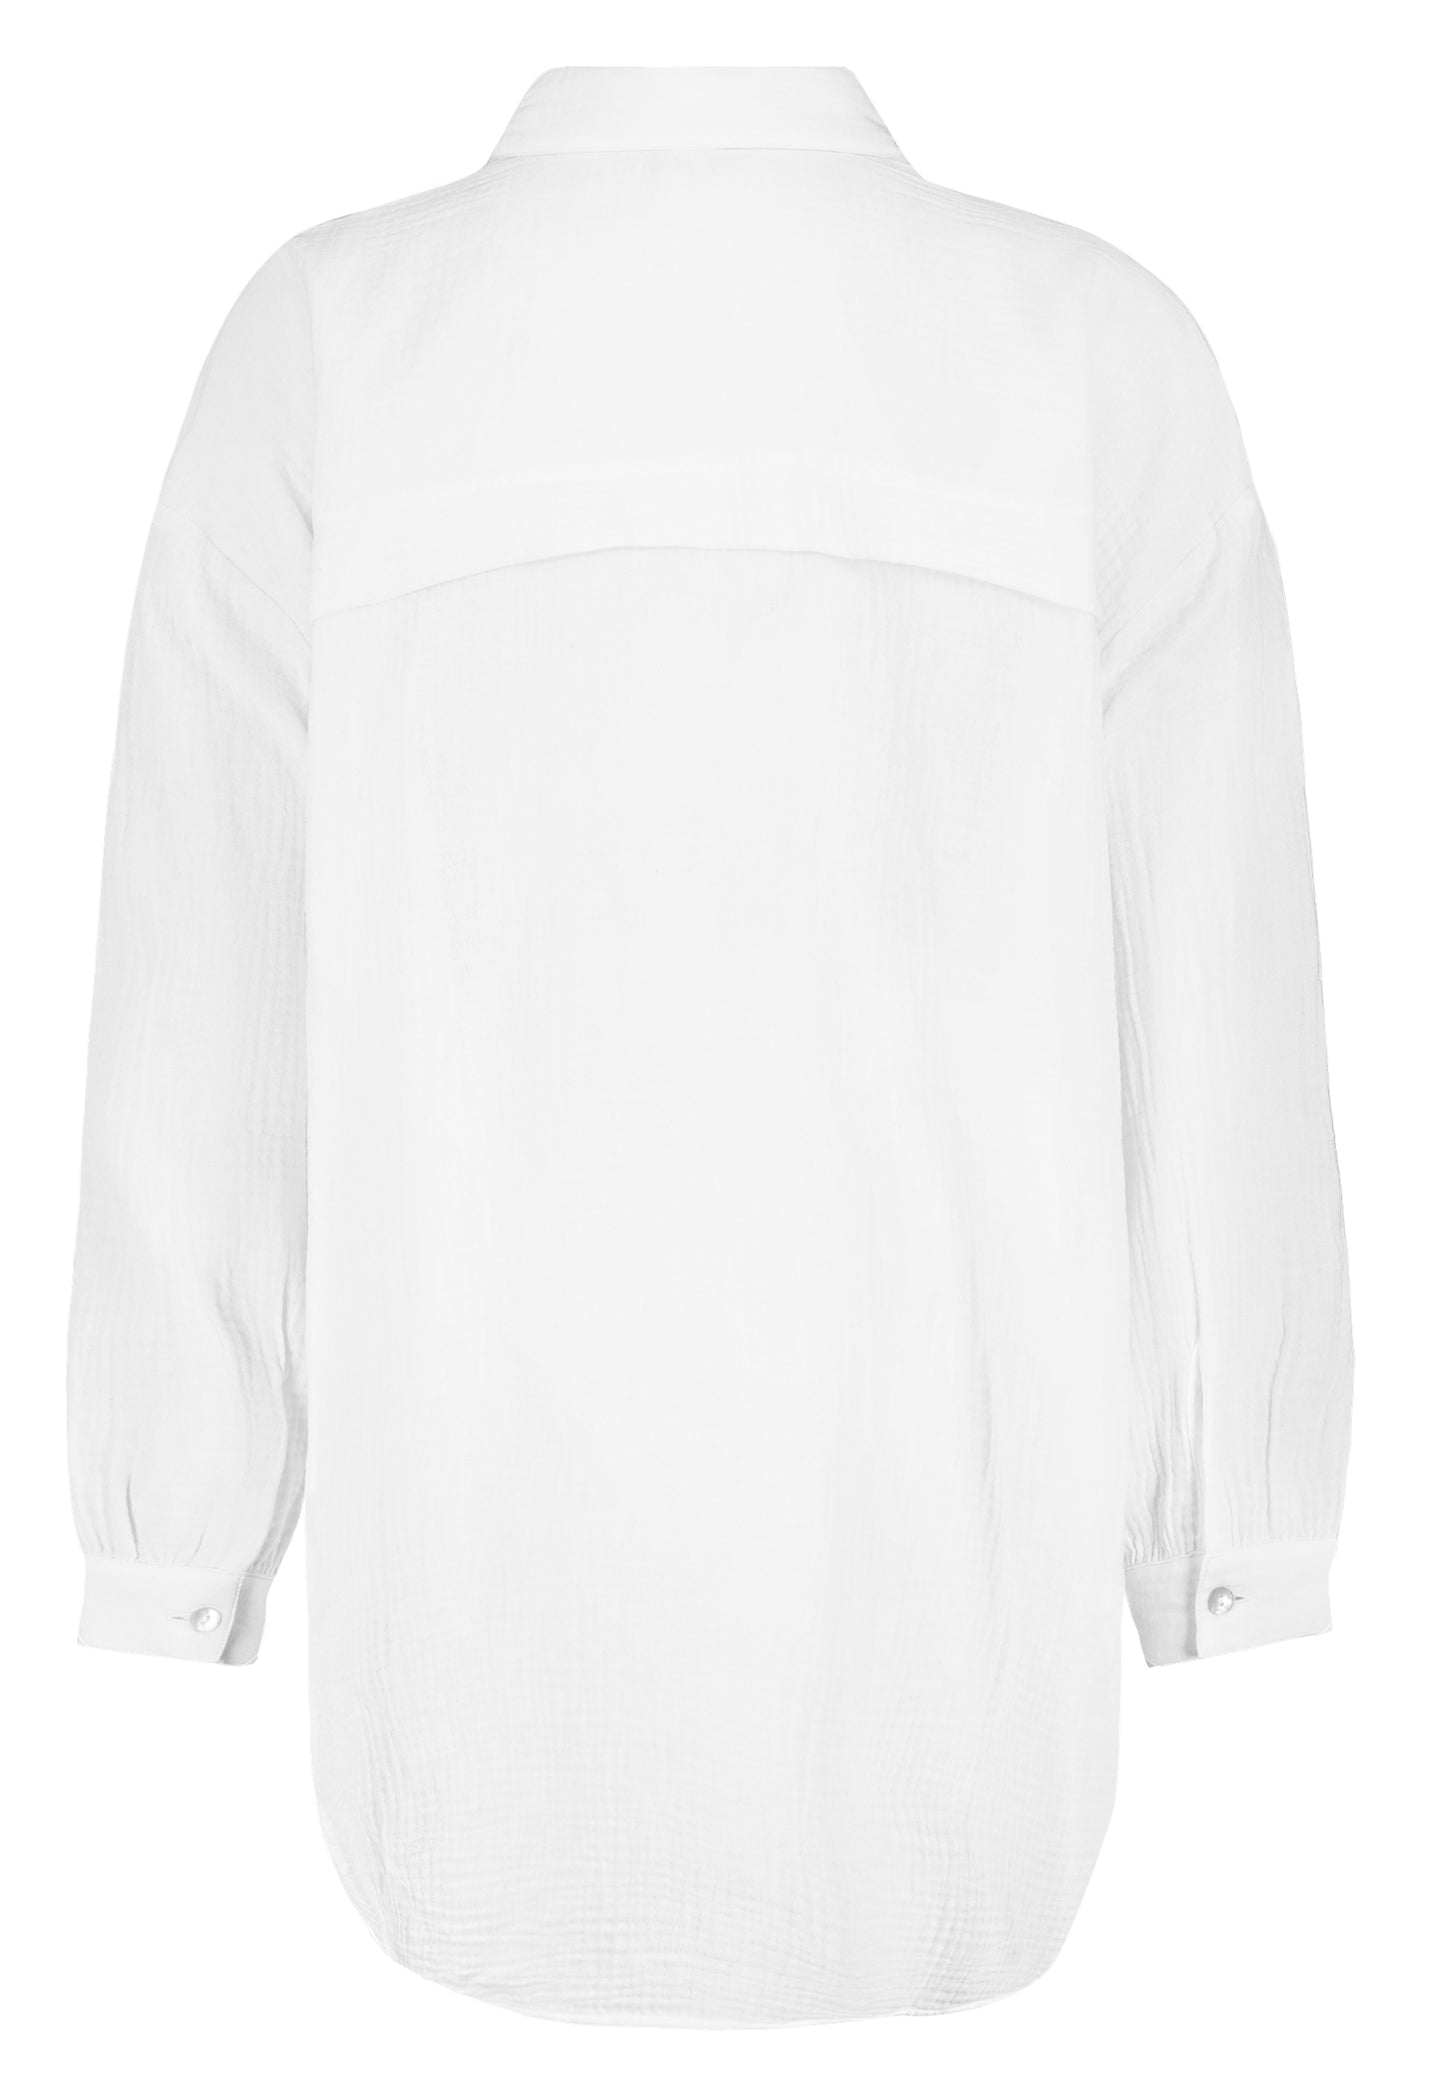 DOB LONG-Bluse, Oversize, überschni, white